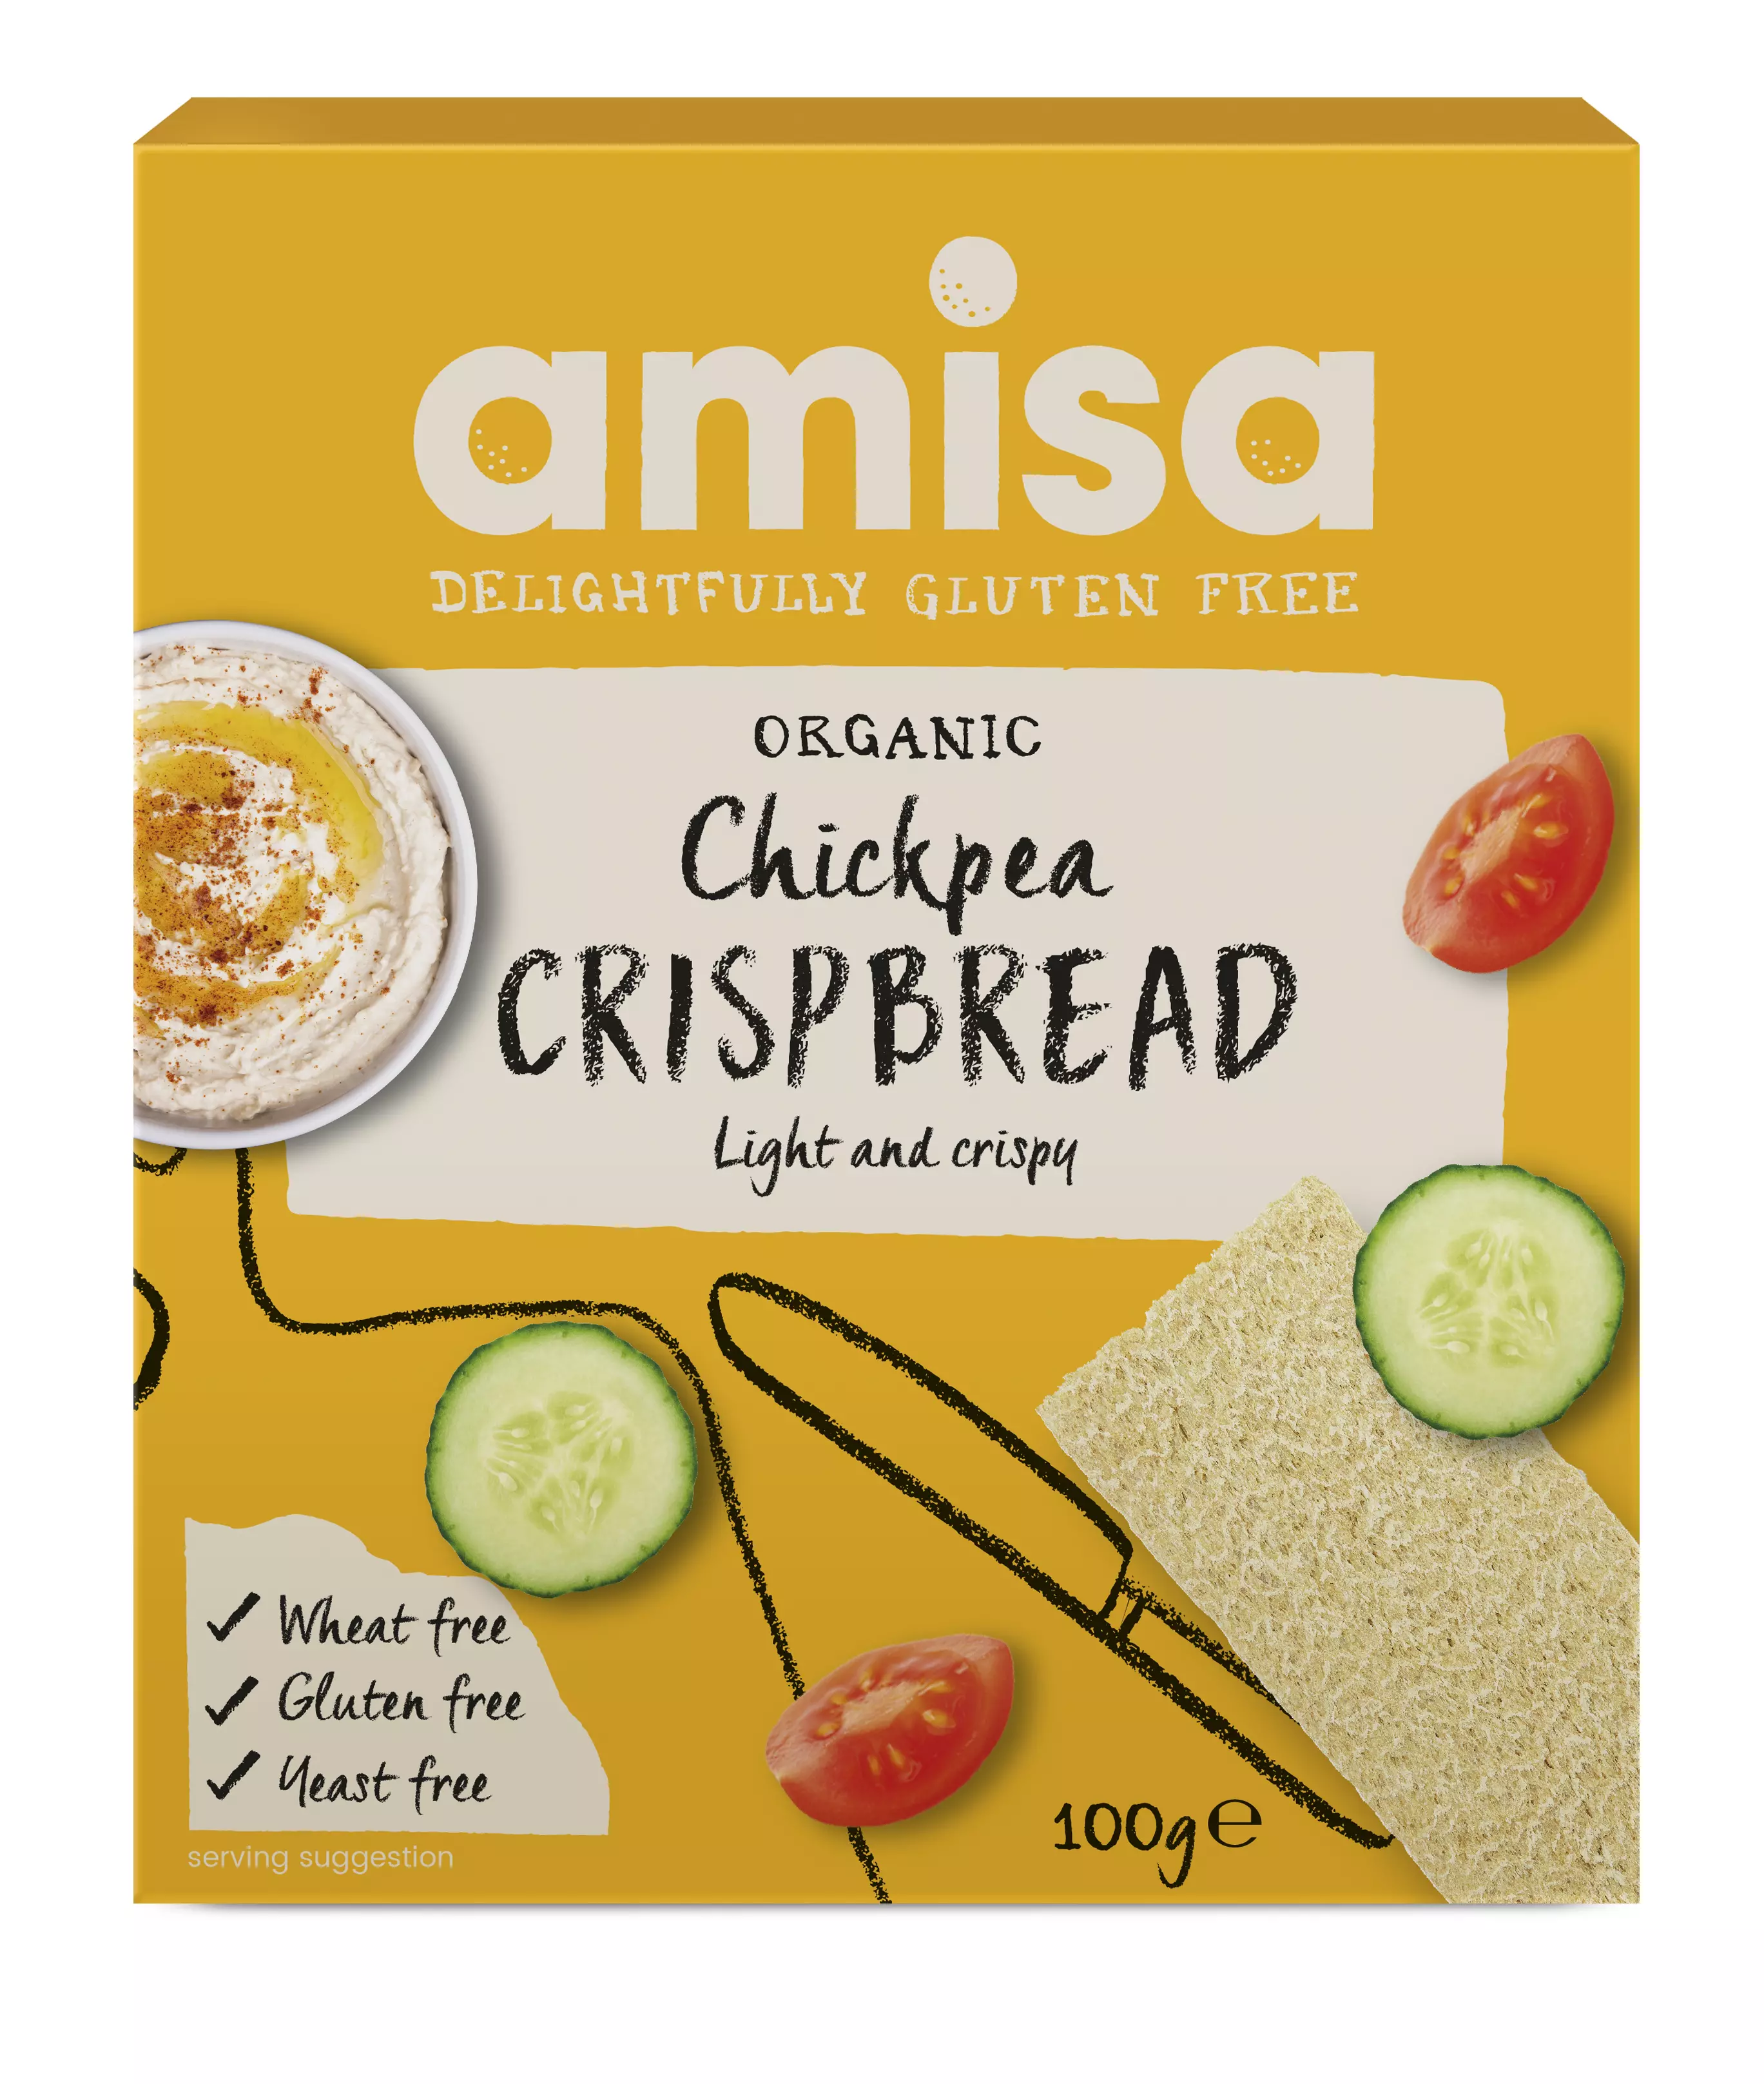 Amisa Crispbread - Chickpea Organic 100g